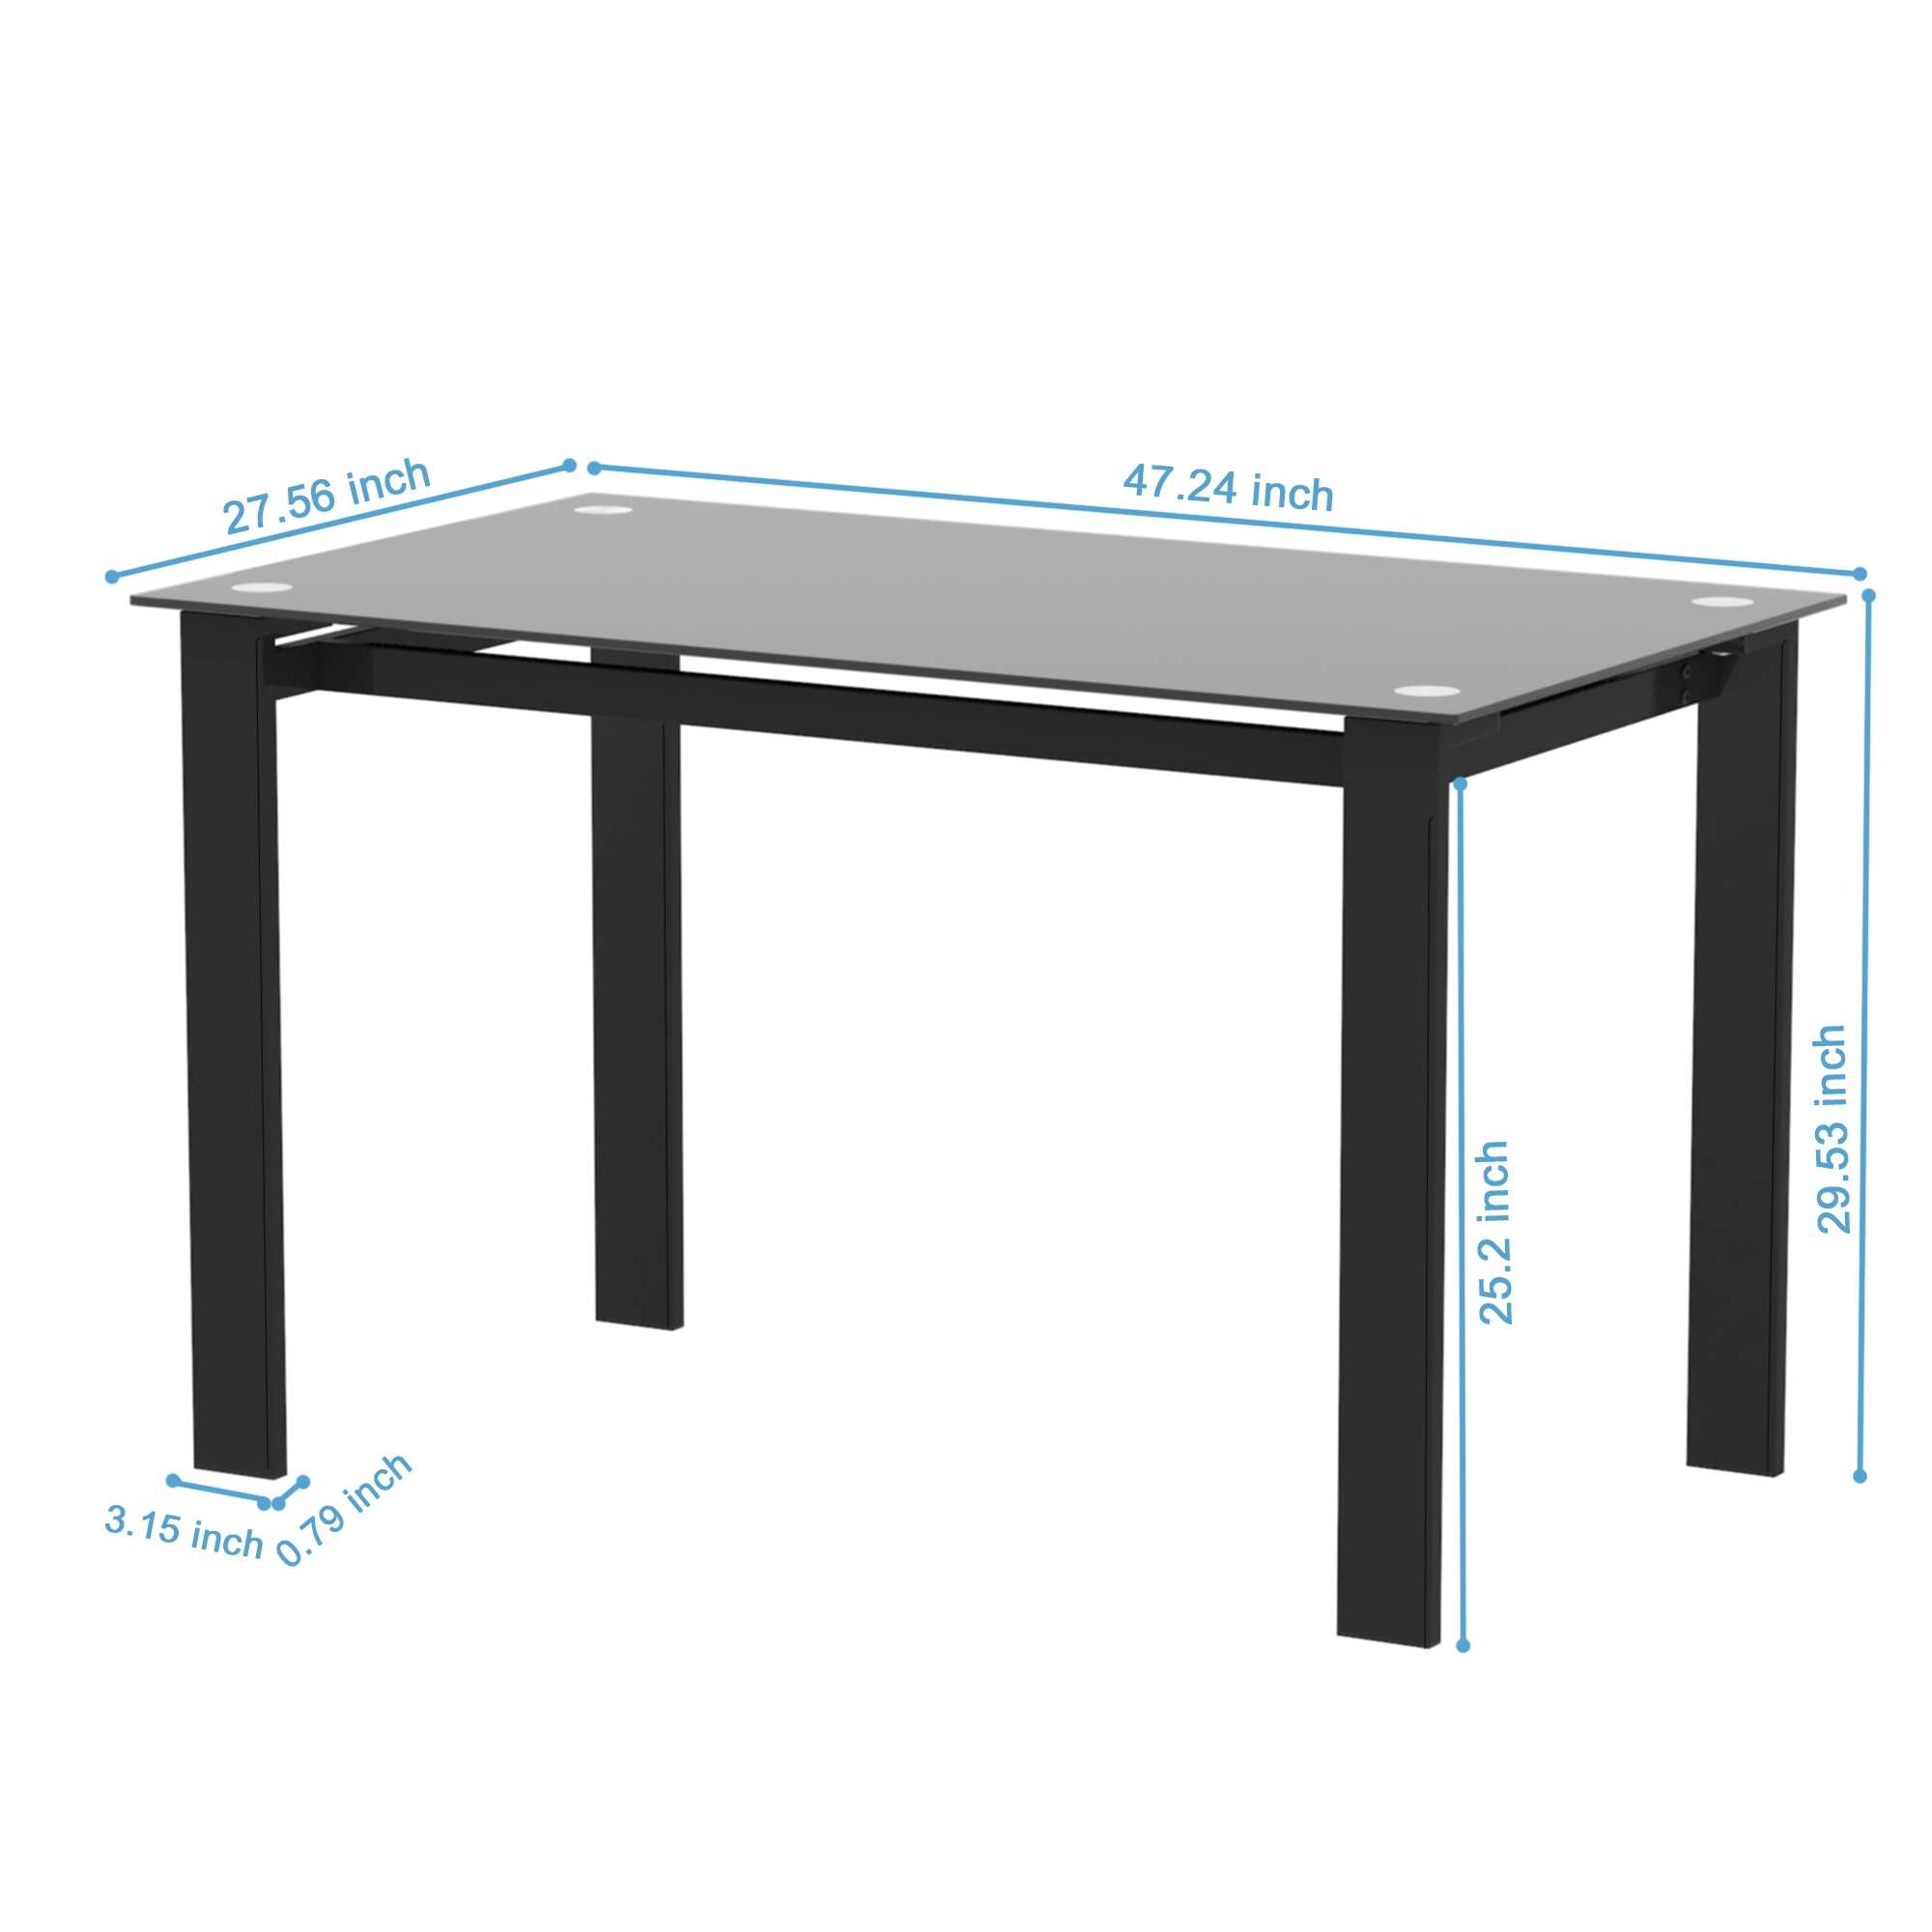 Rectangular tempered glass black dining table